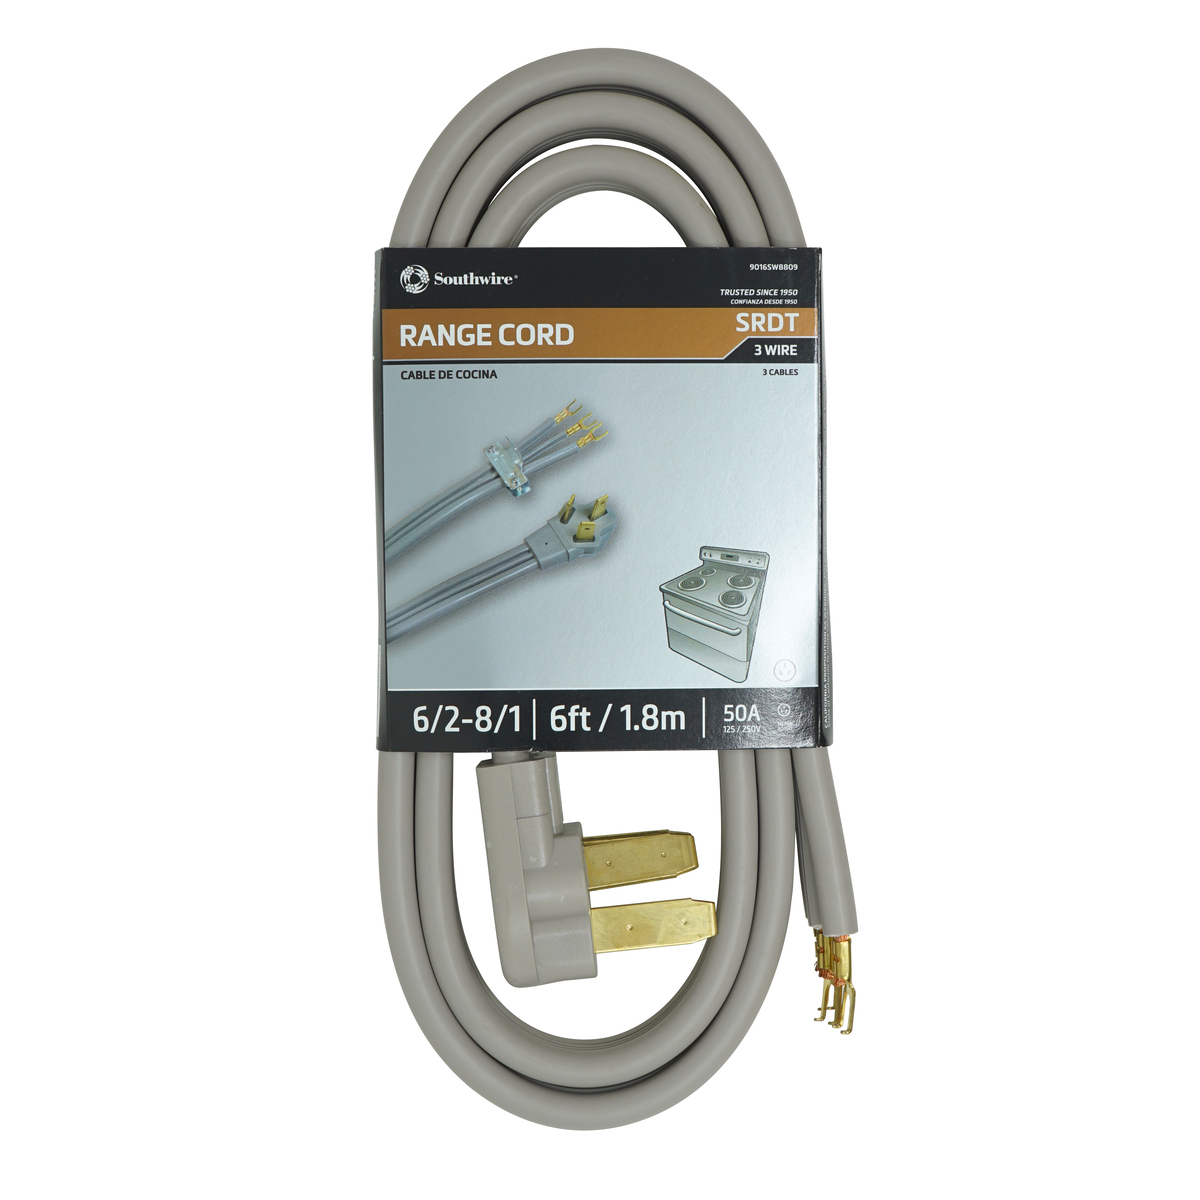 Range Replacement Cord - 6/2-8/1 50-AmpFlat SRDT 3-Wire 6' with NEMA 10-50 Plug - Gray